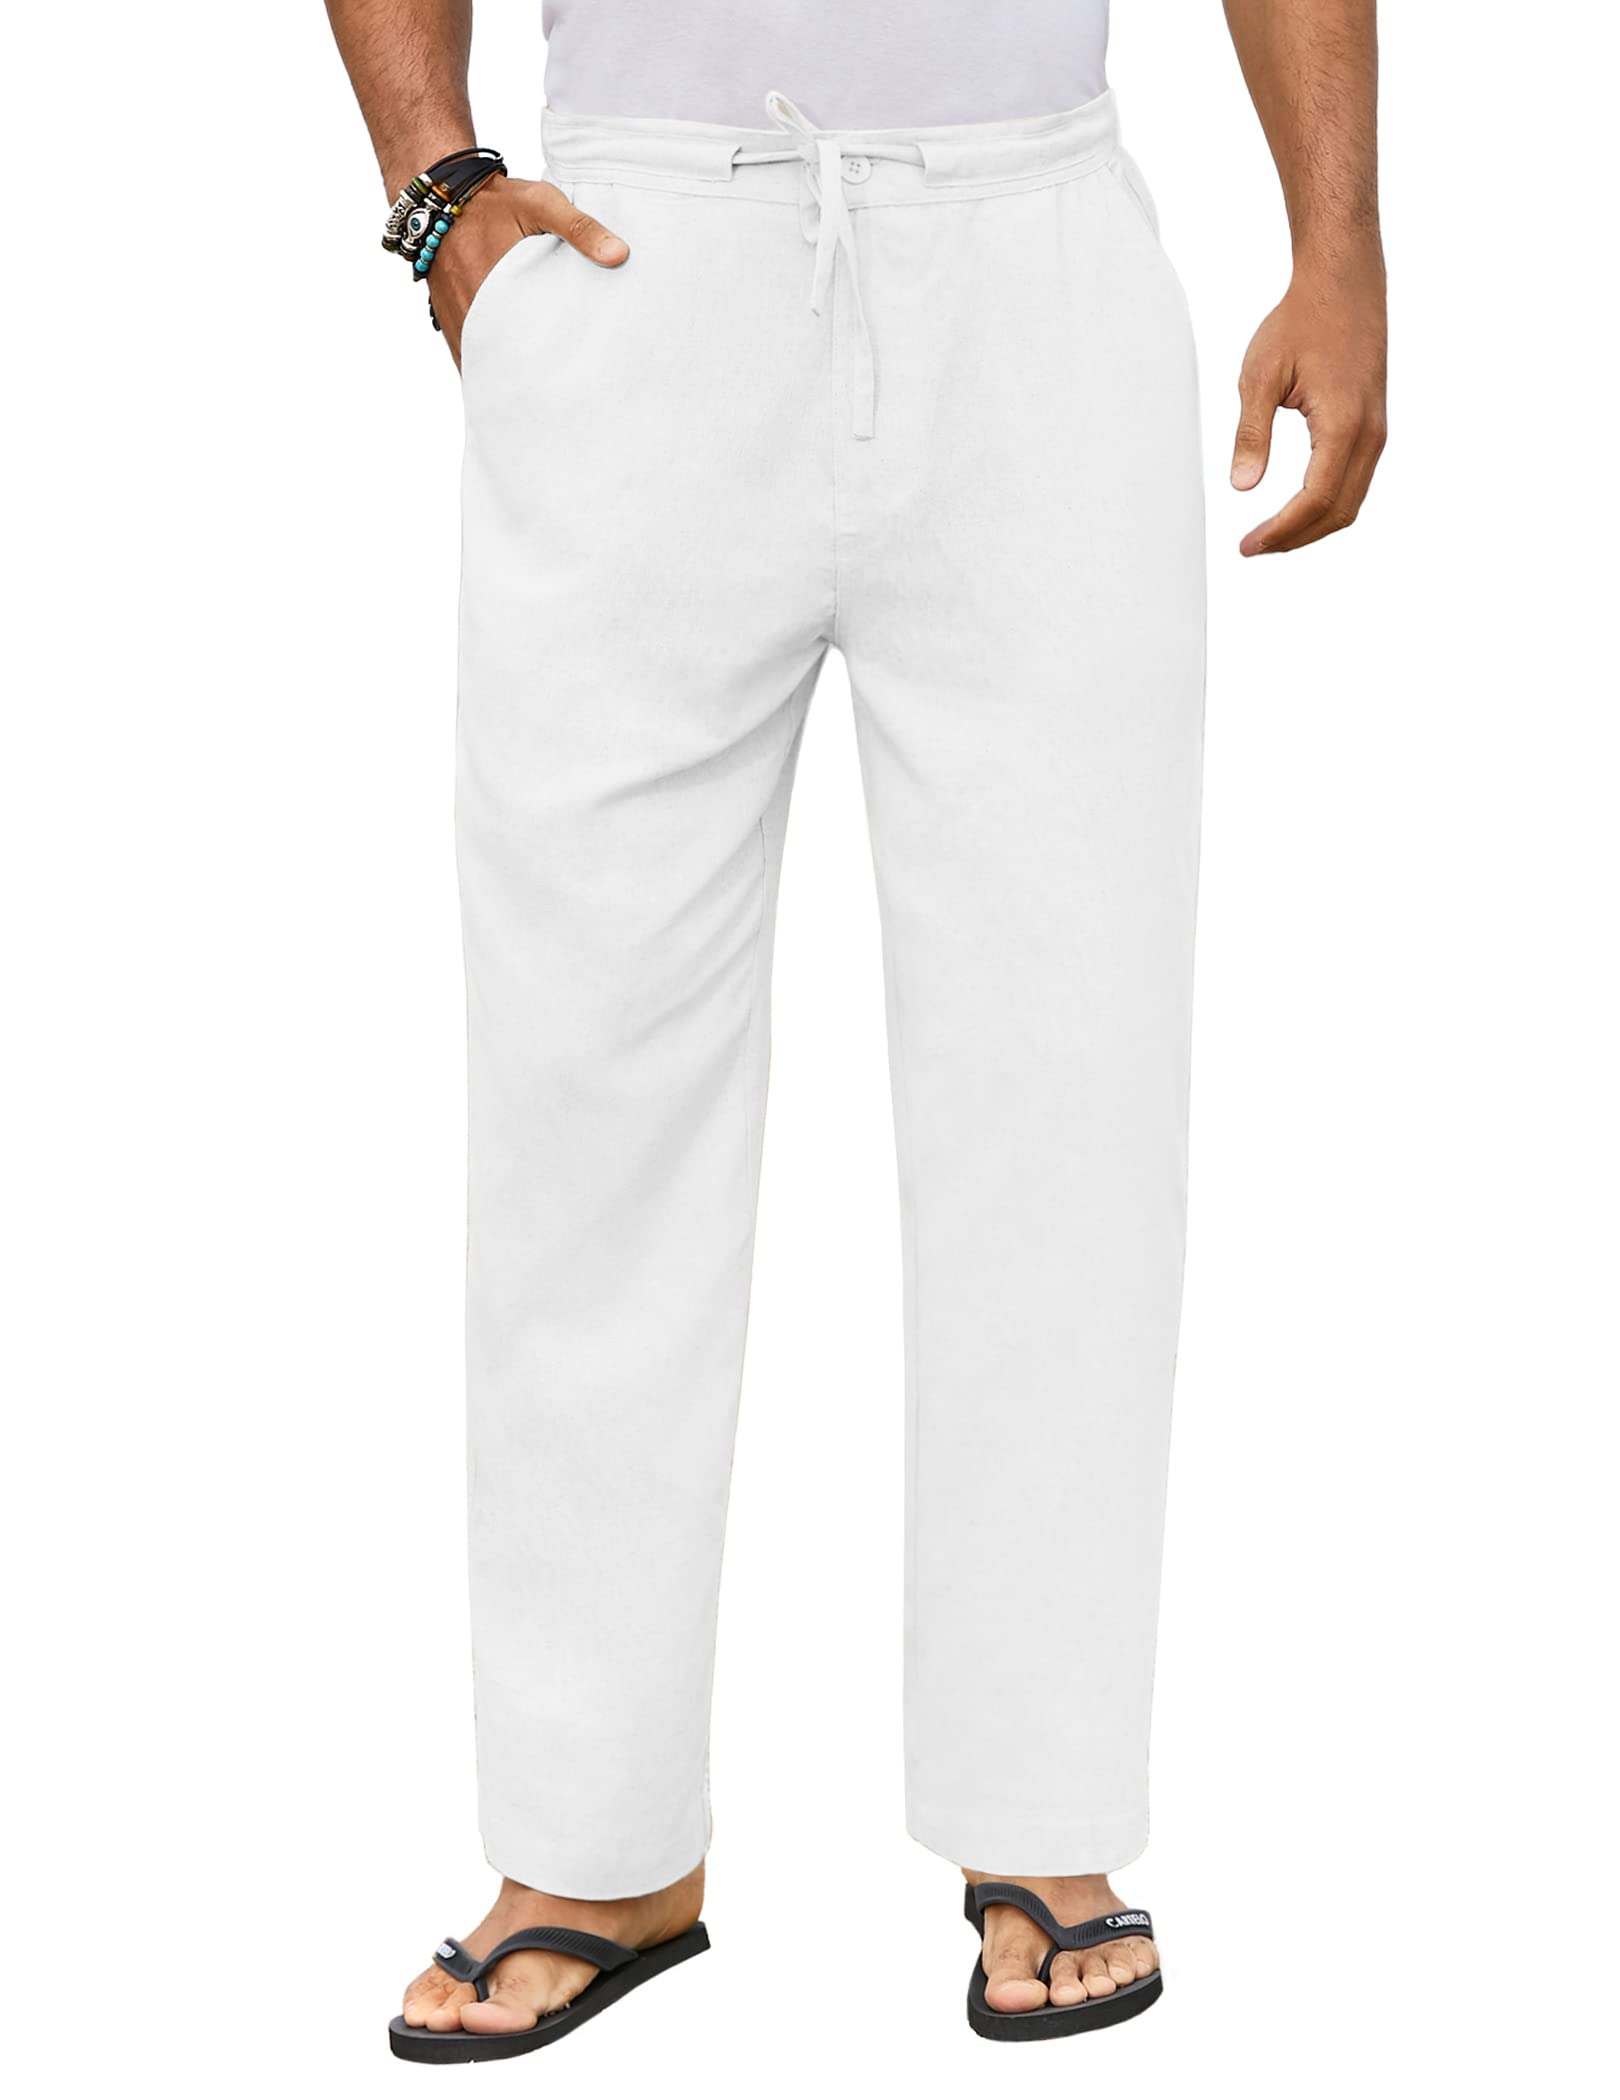 Buy White Trousers & Pants for Women by NEUDIS Online | Ajio.com